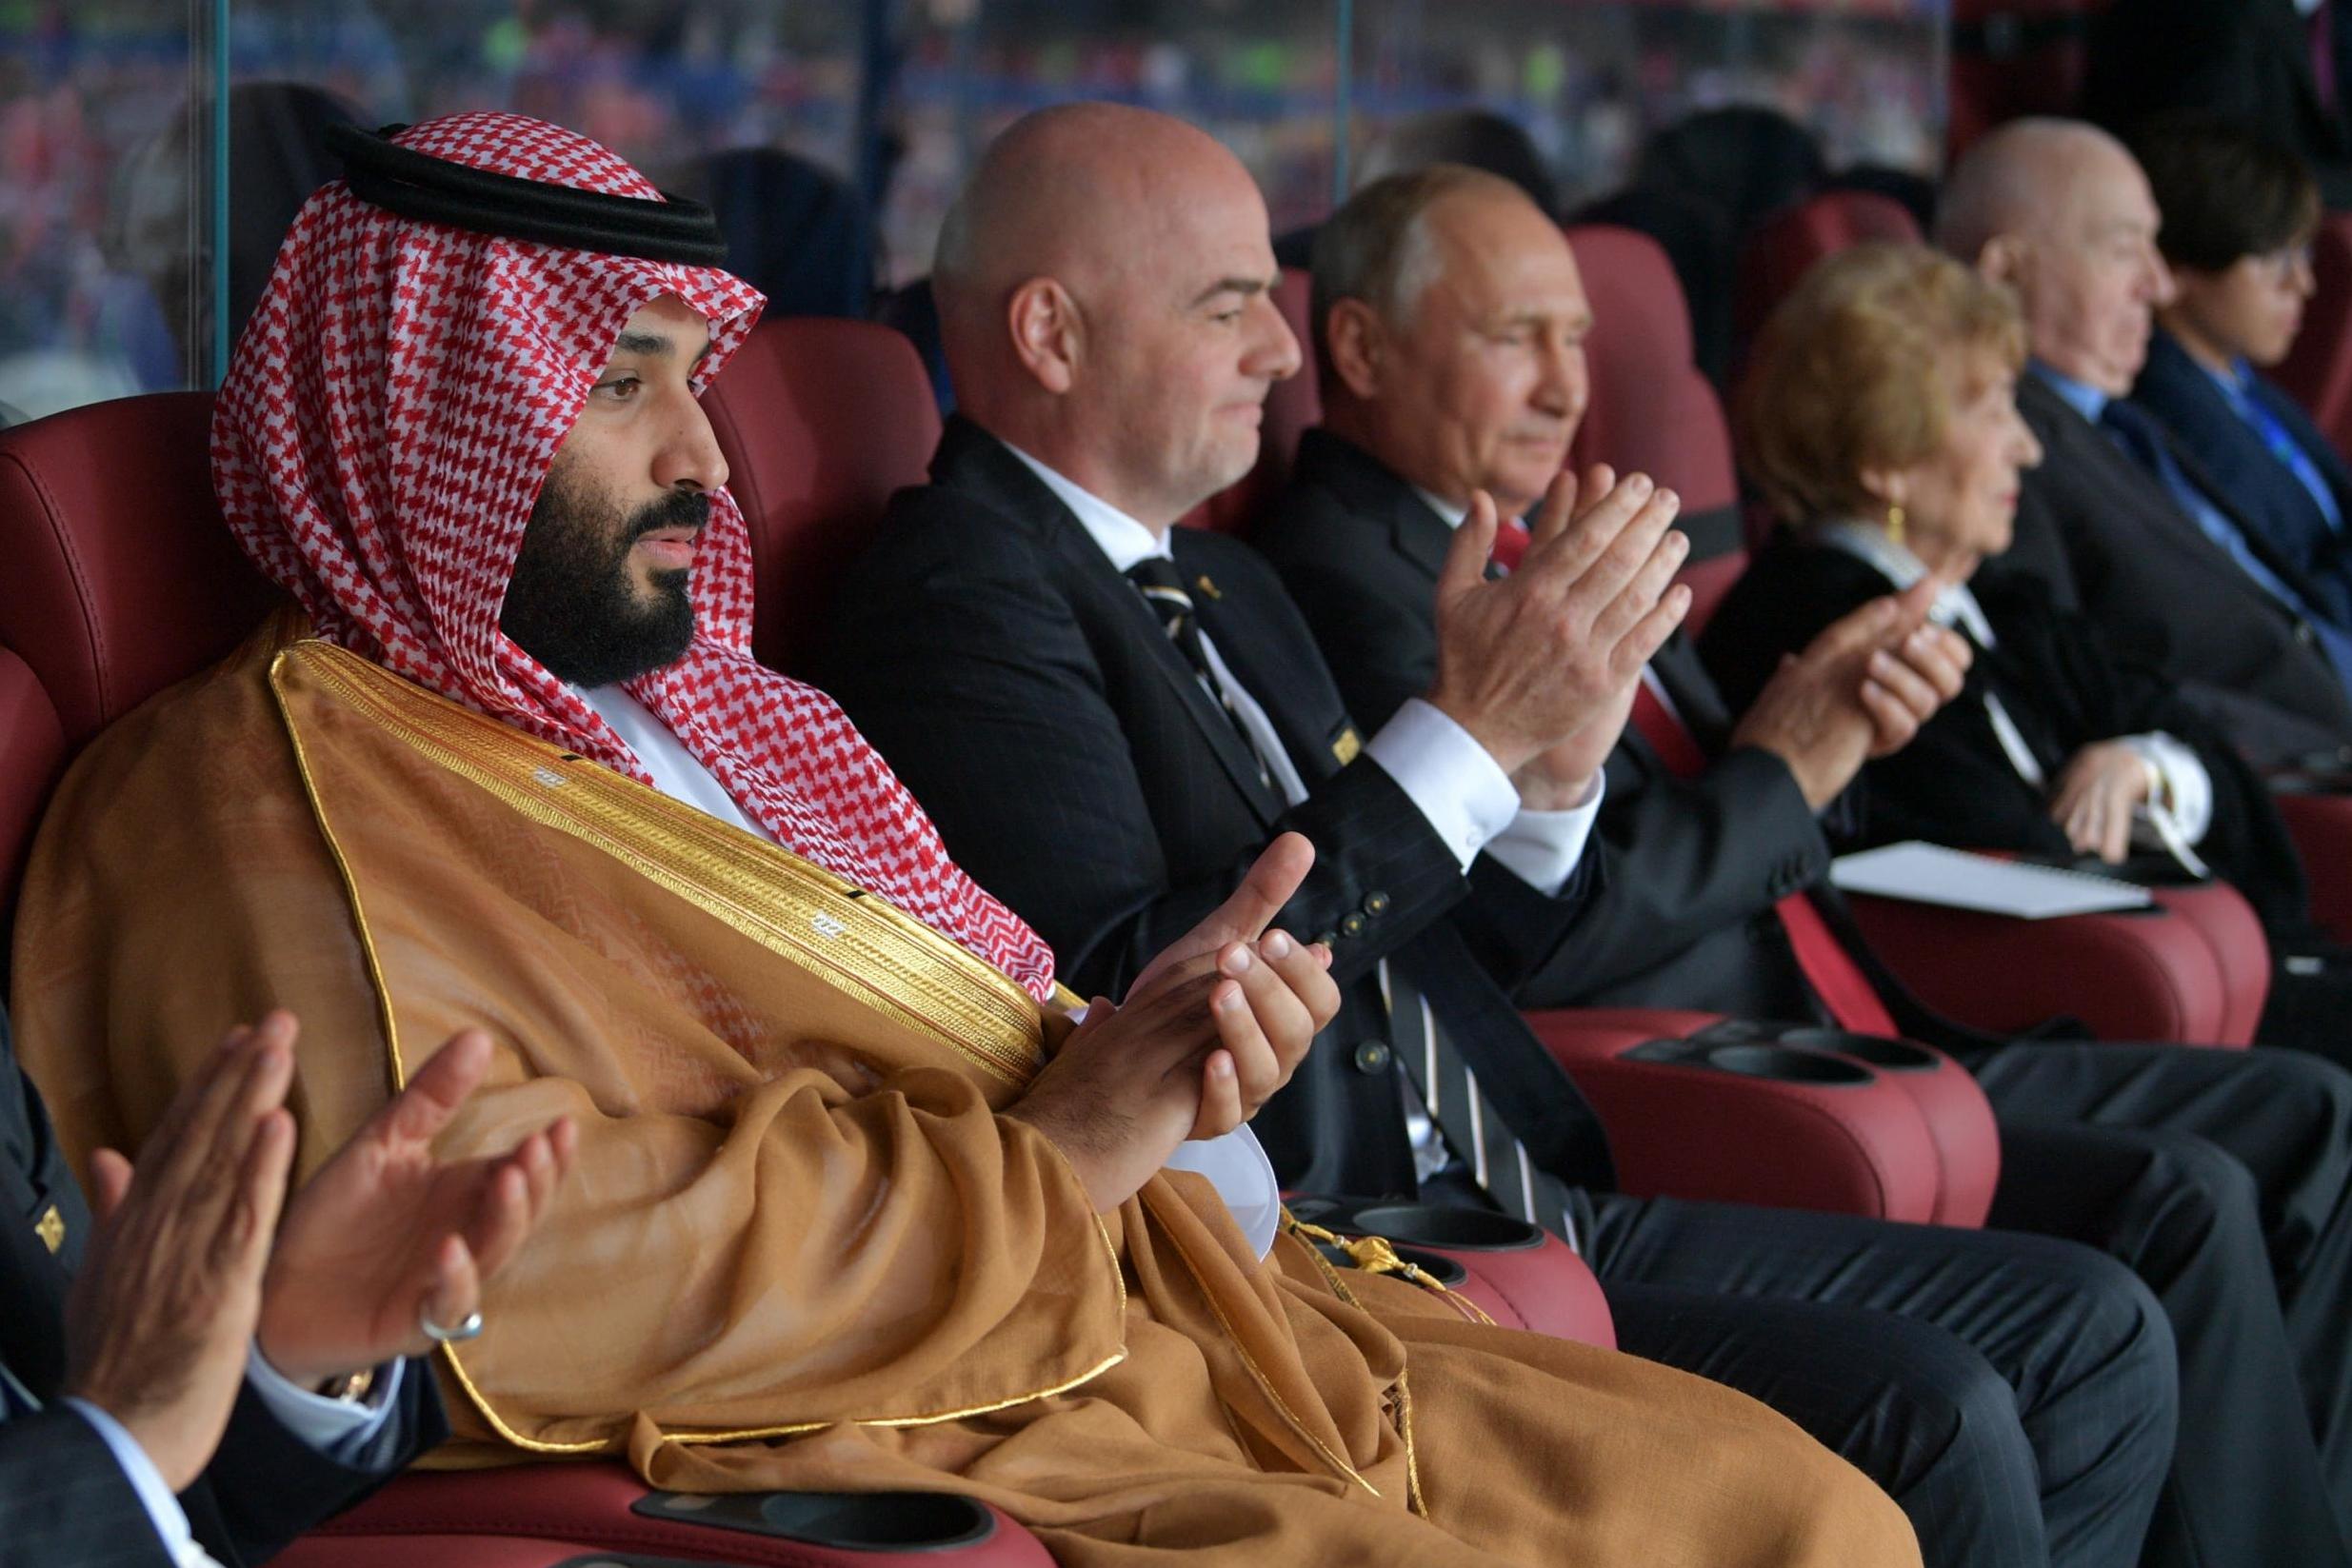 Mohammed bin Salman, Fifa president Gianni Infantino and Vladimir Putin watch the 2018 World Cup match between Russia and Saudi Arabia